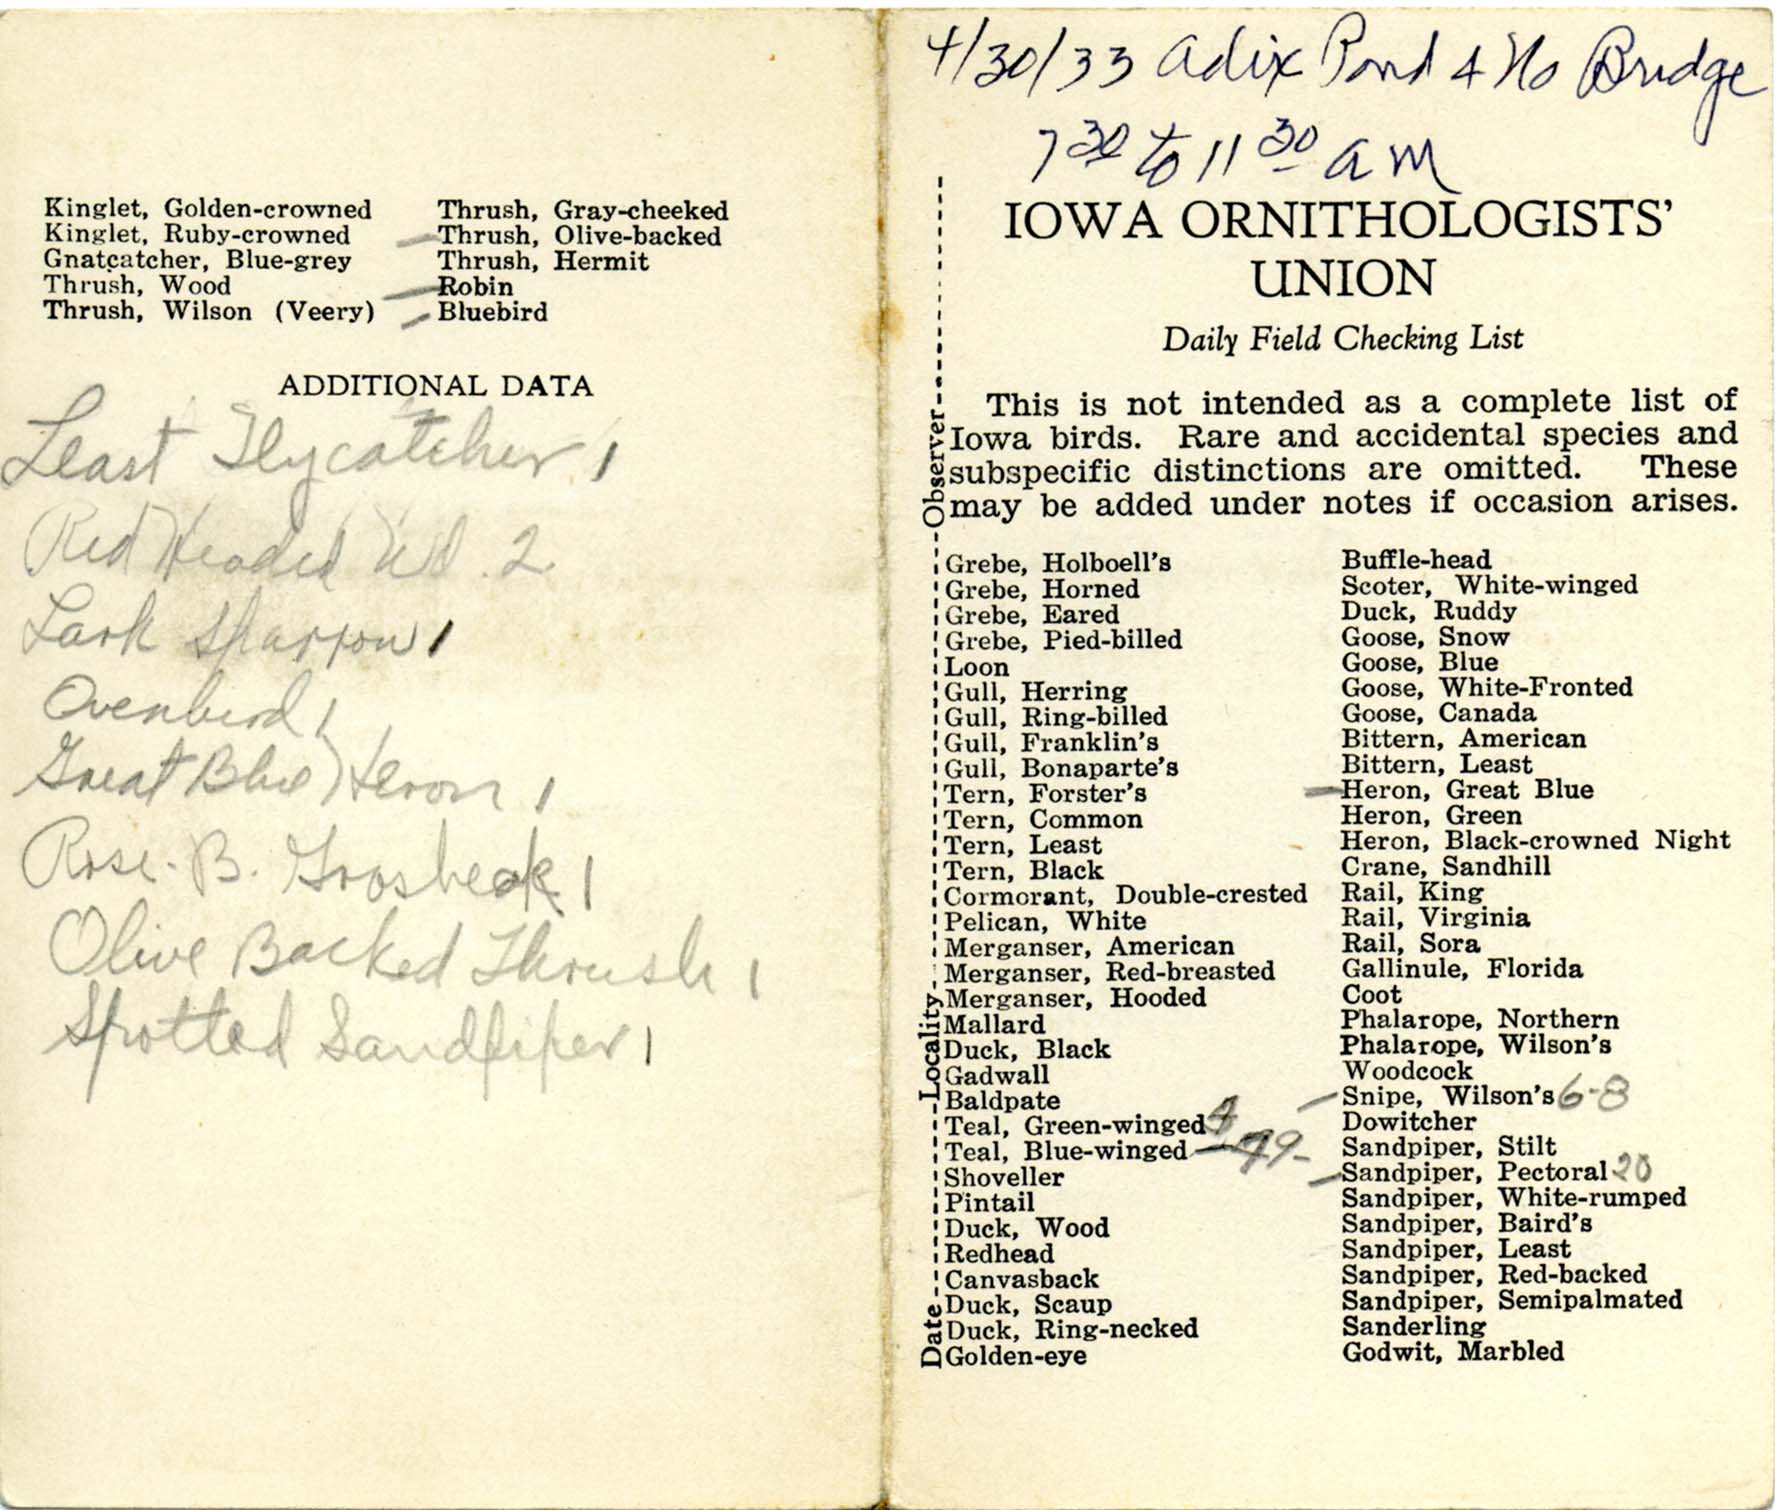 Daily field checking list, Walter Rosene, April 30, 1933